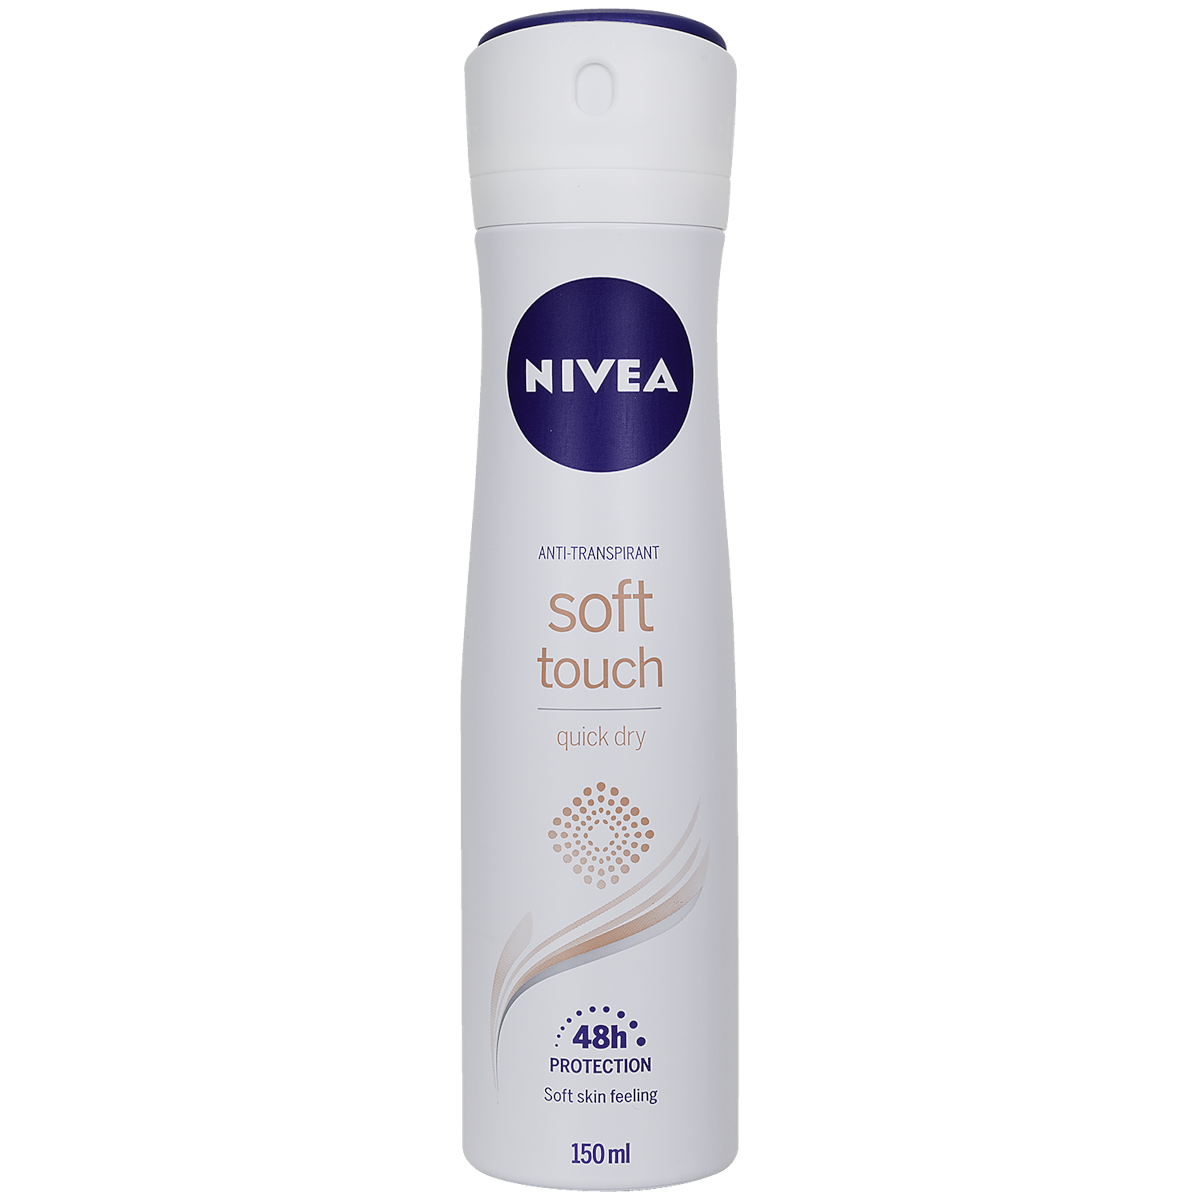 Nivea Deodorant Soft Touch